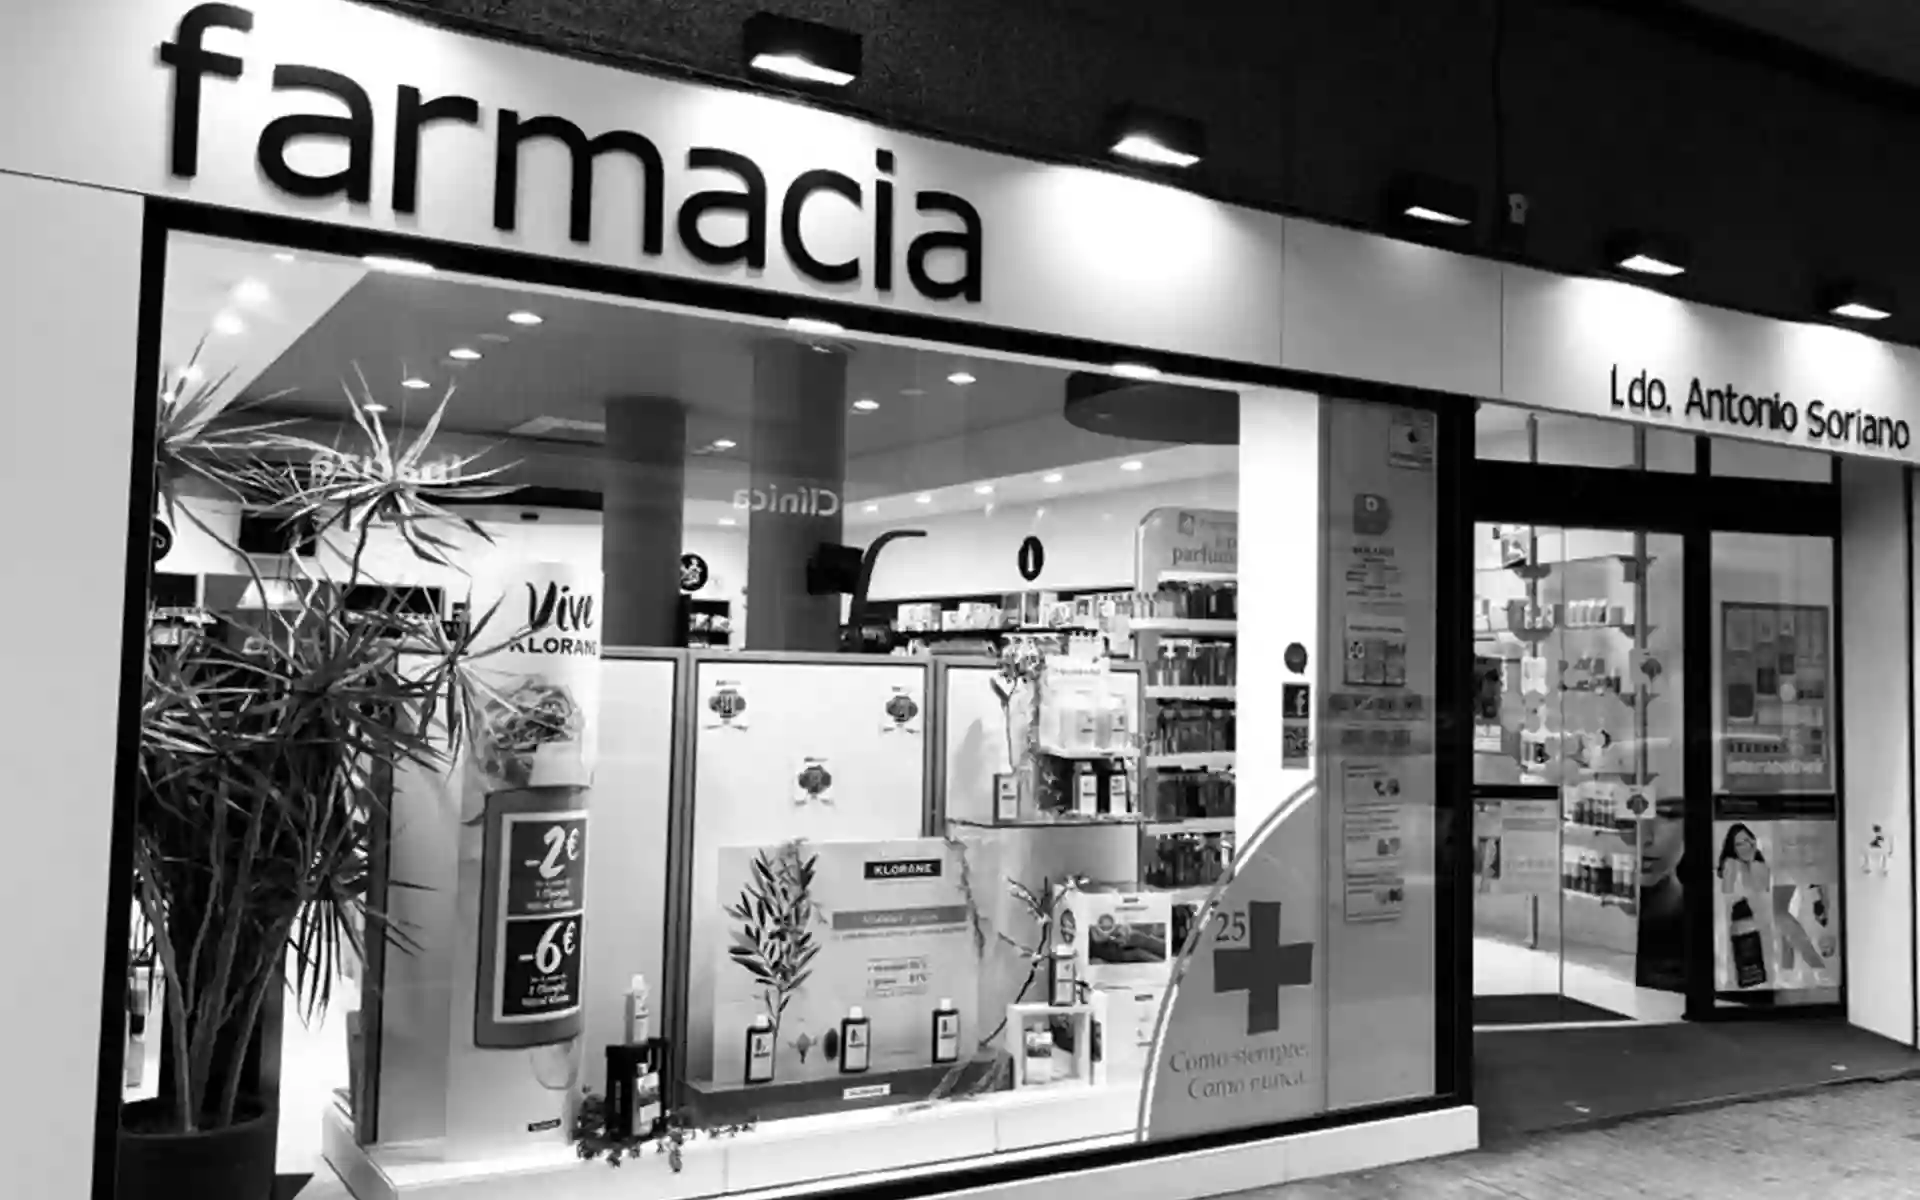 Farmacia Antonio Soriano